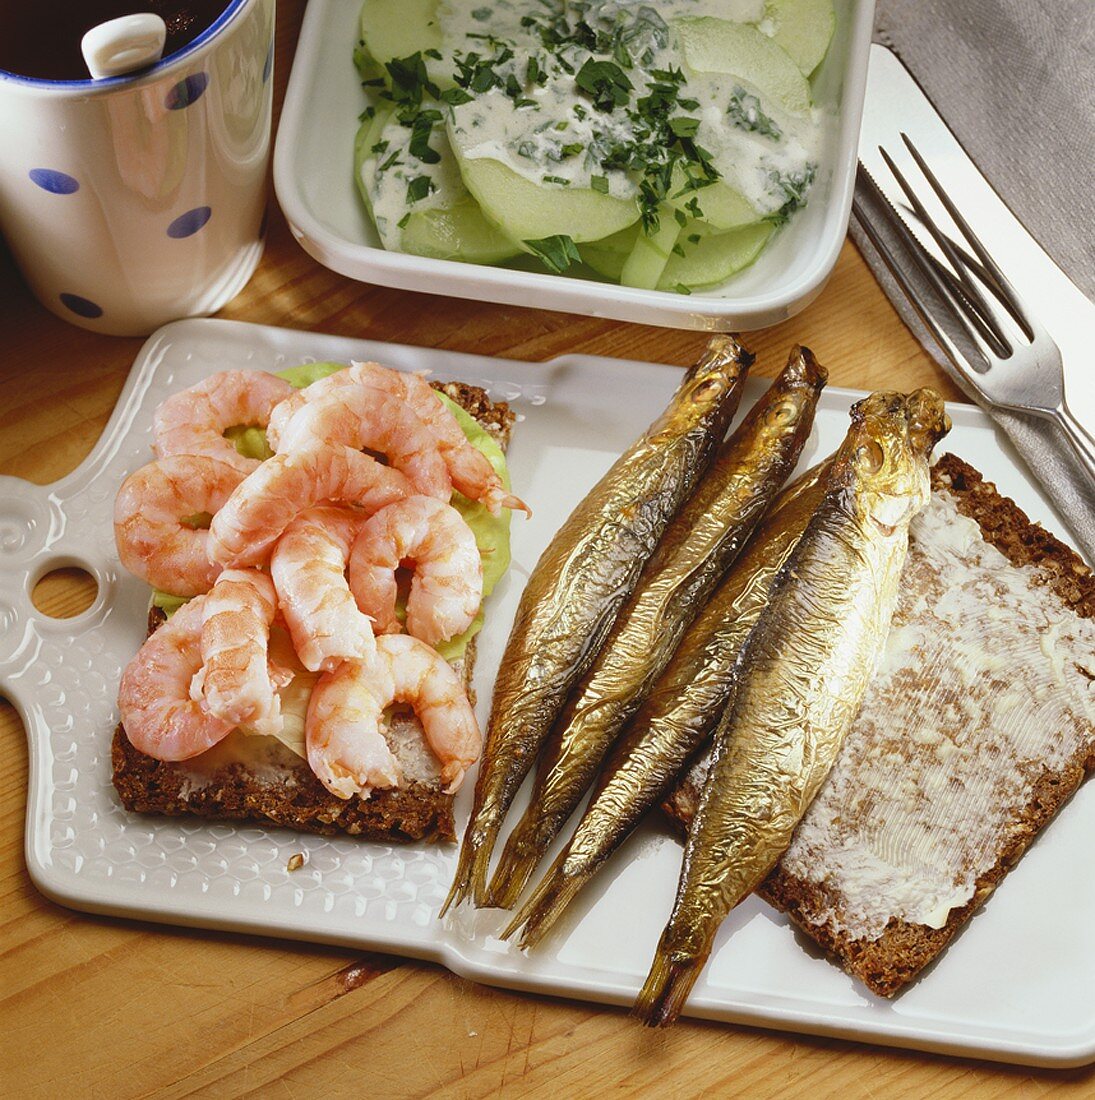 Fisherman's breakfast: shrimps and fish on black bread